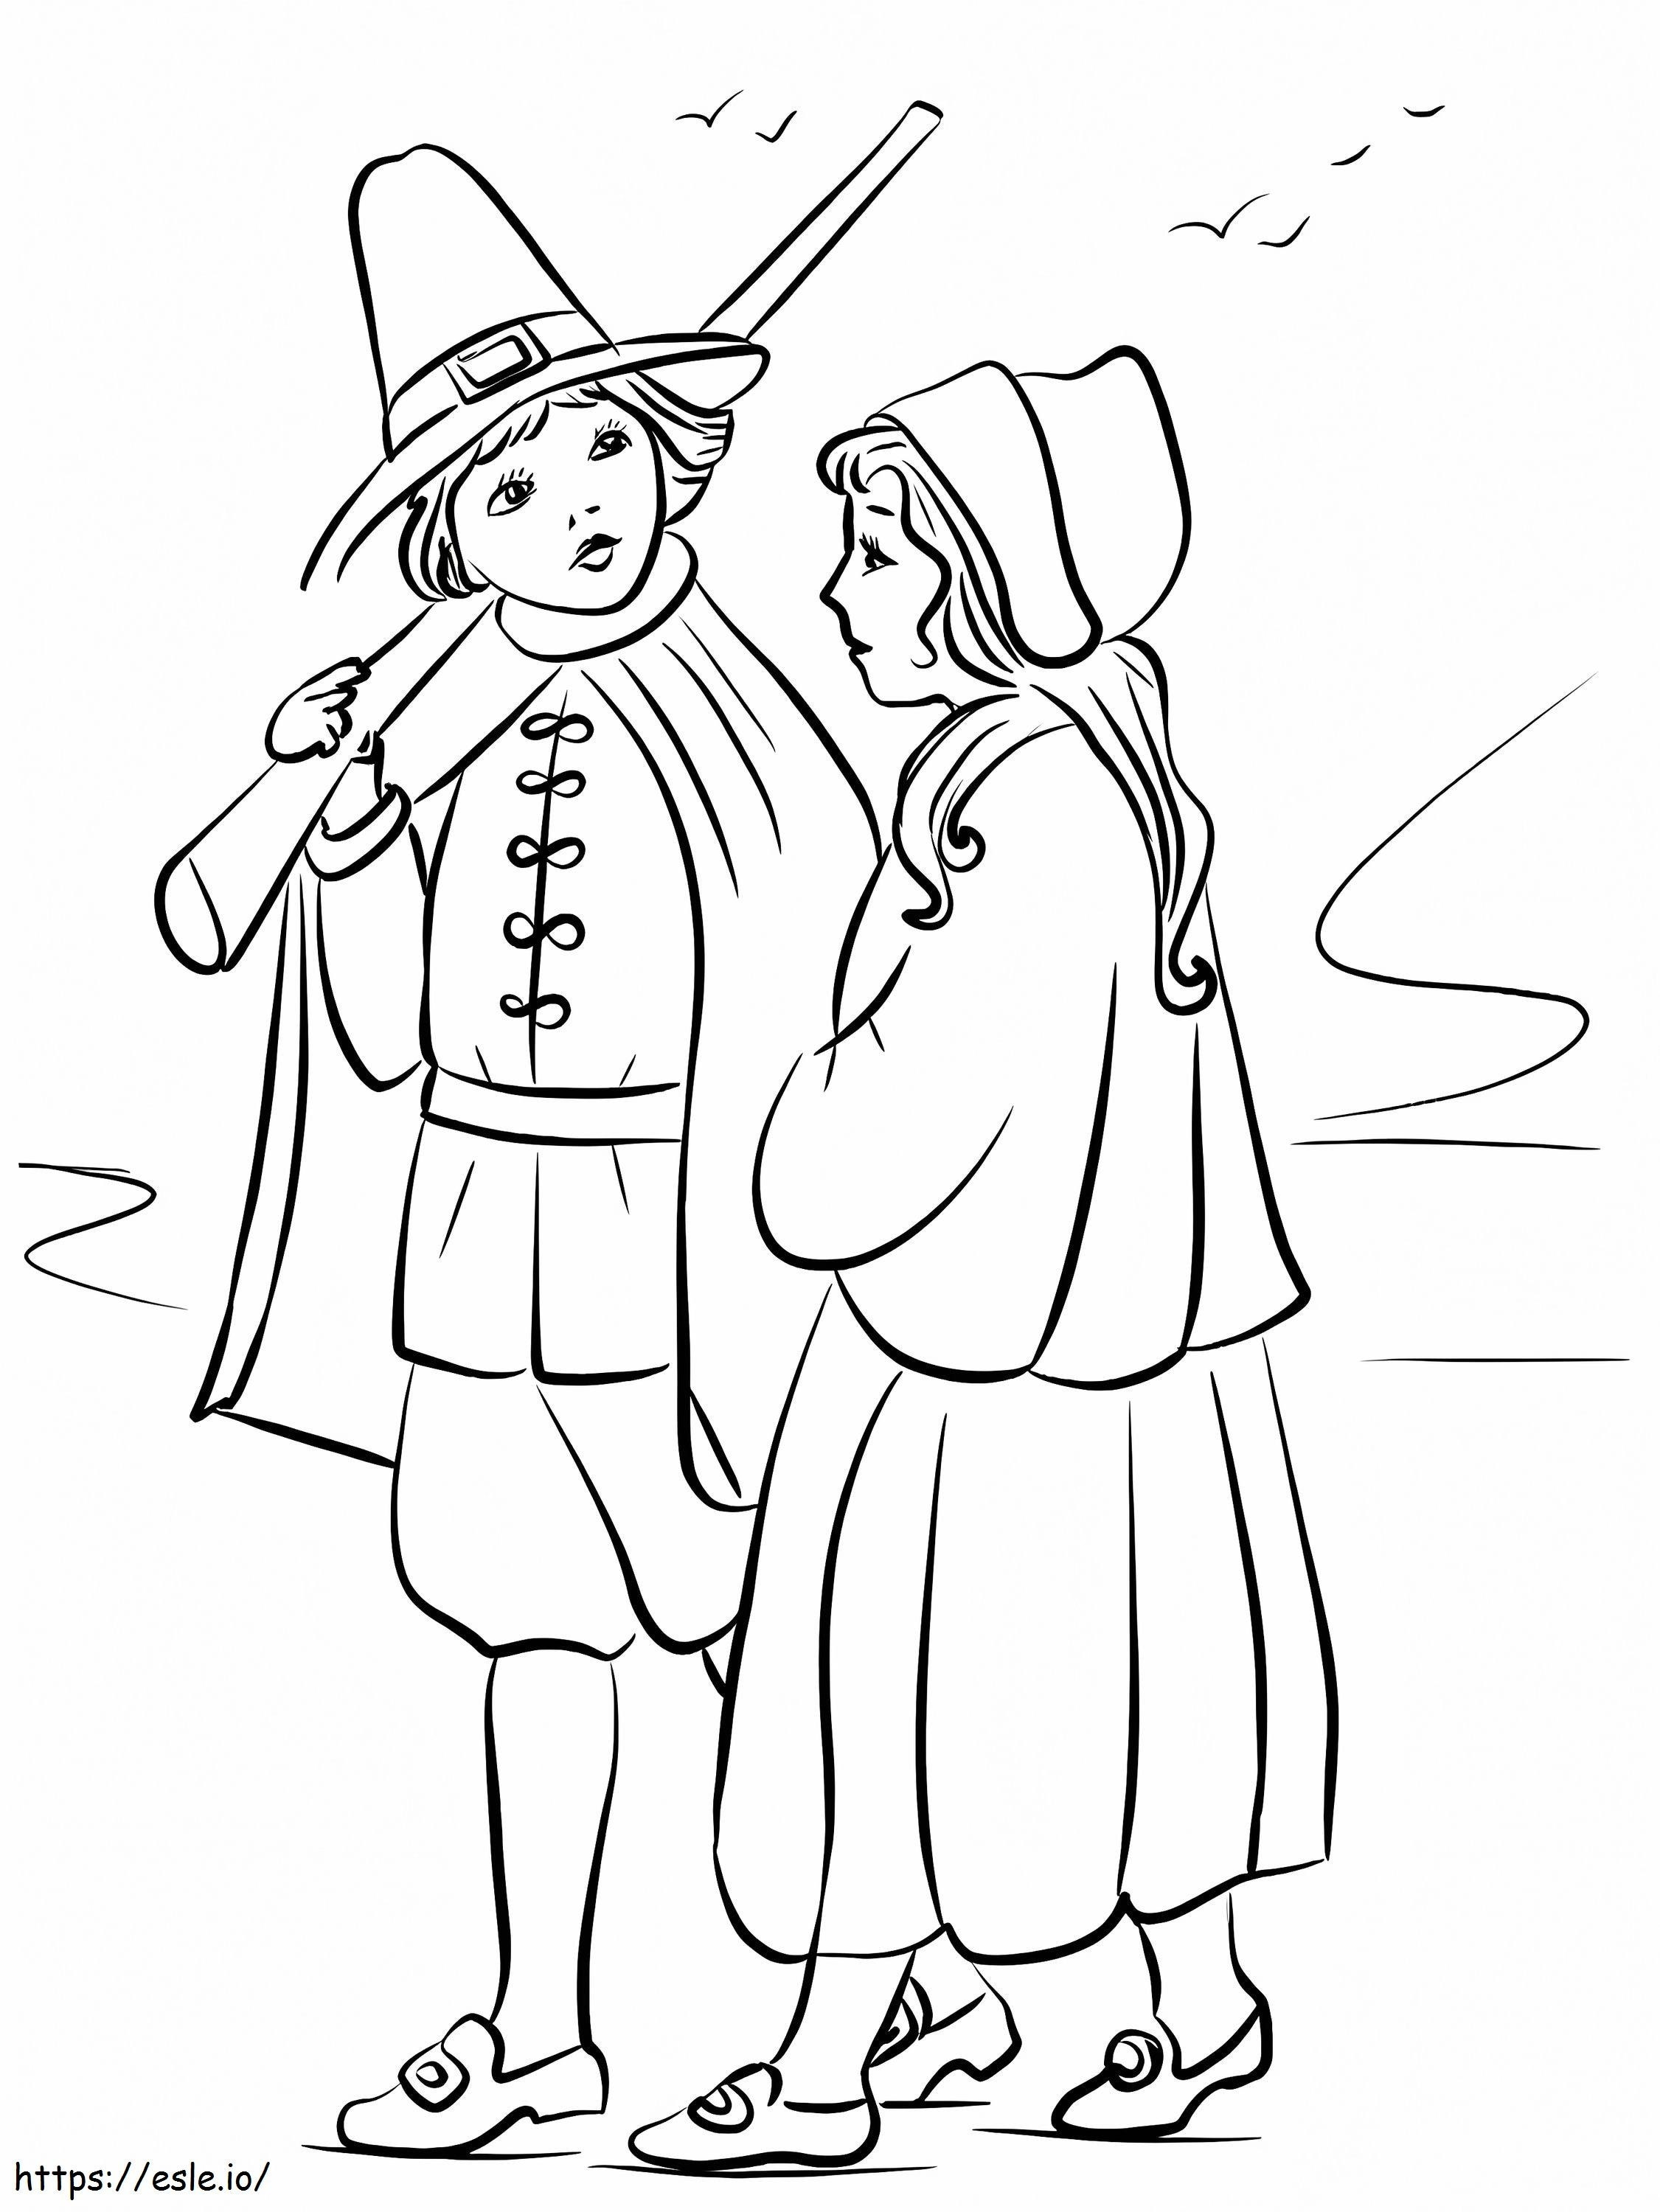 1588062180 Pilgrim Children coloring page